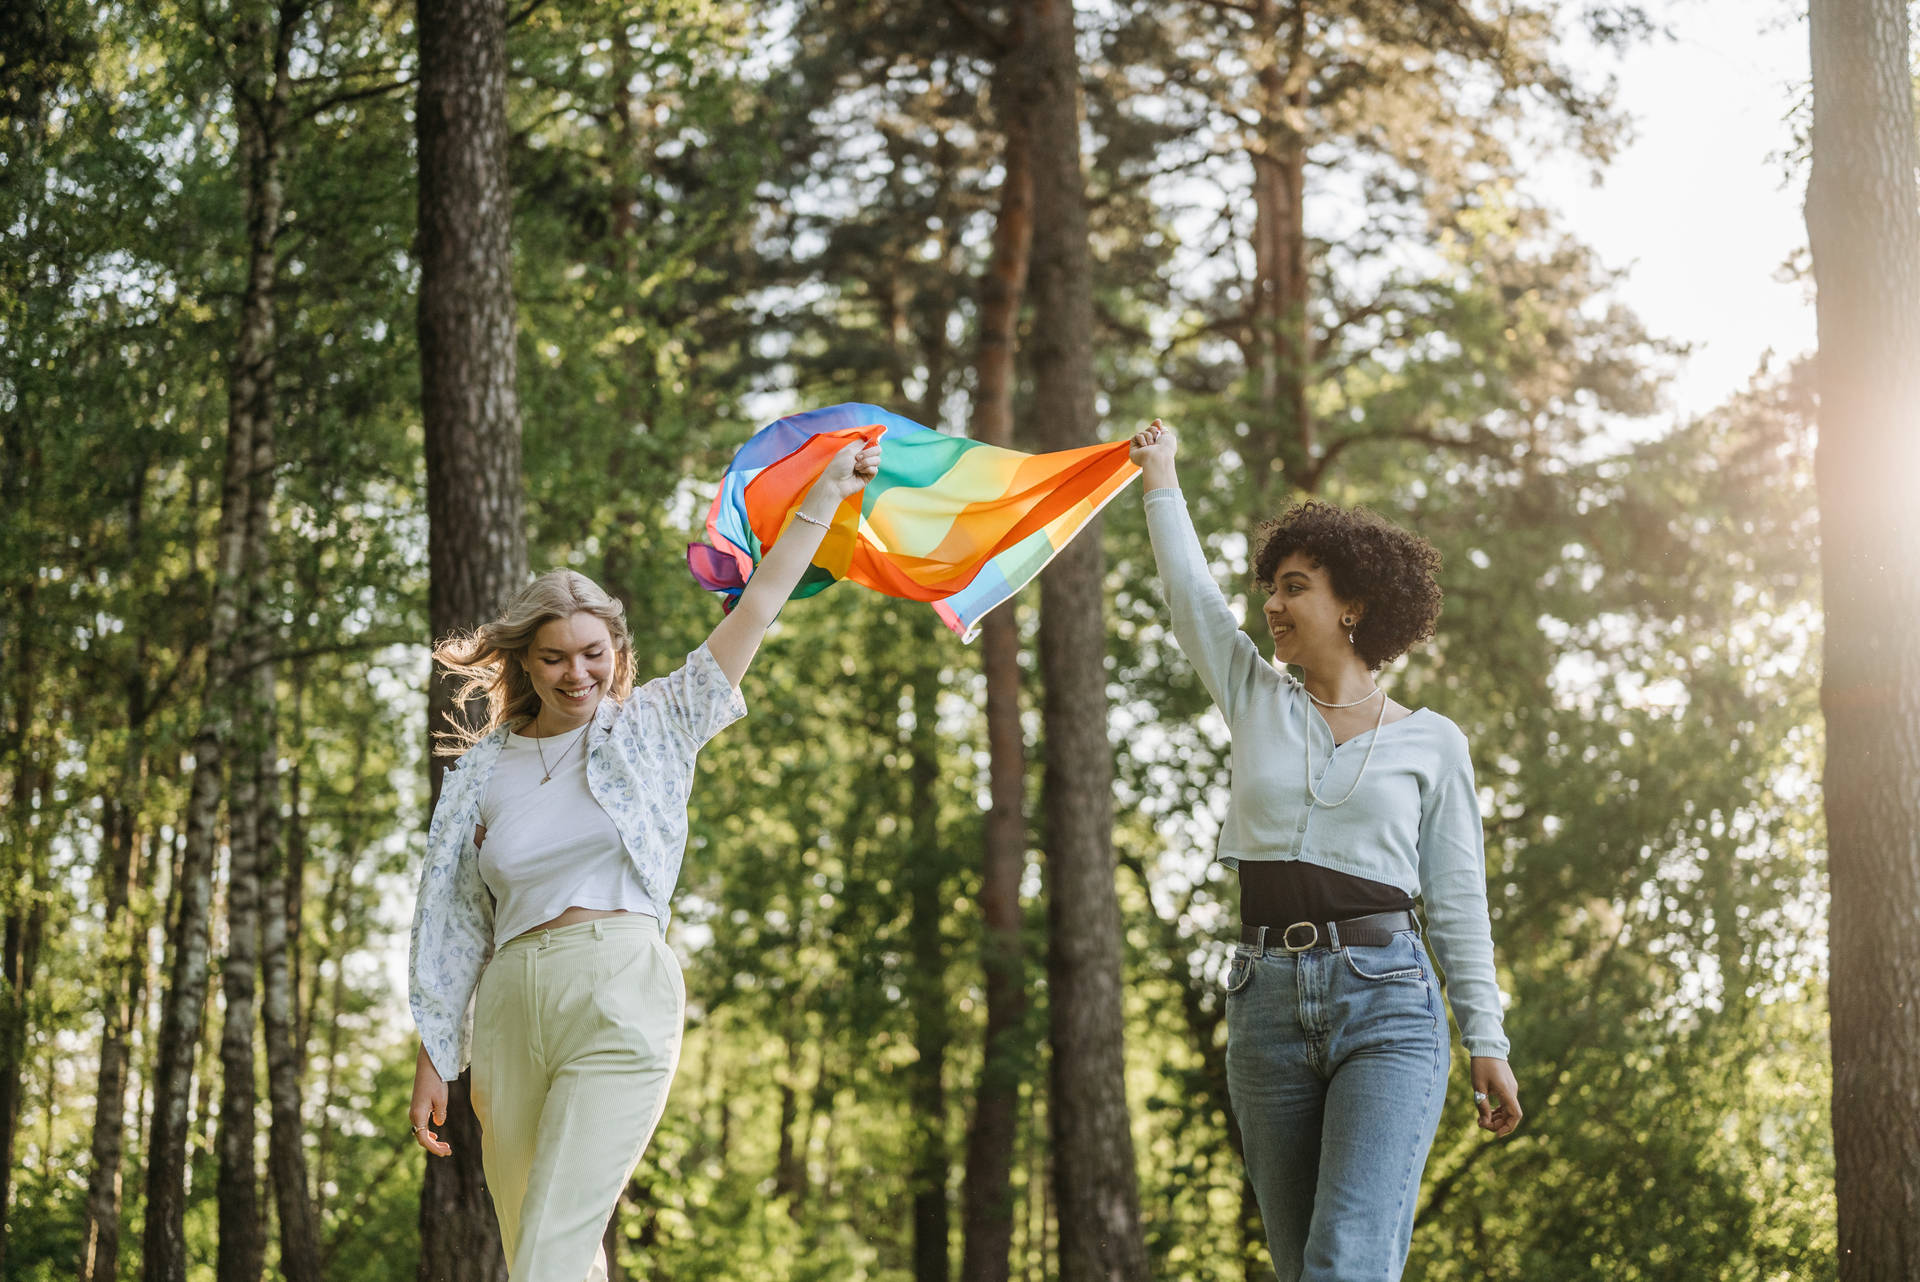 Pride In Diversity - Illustration Of Lesbian Flag